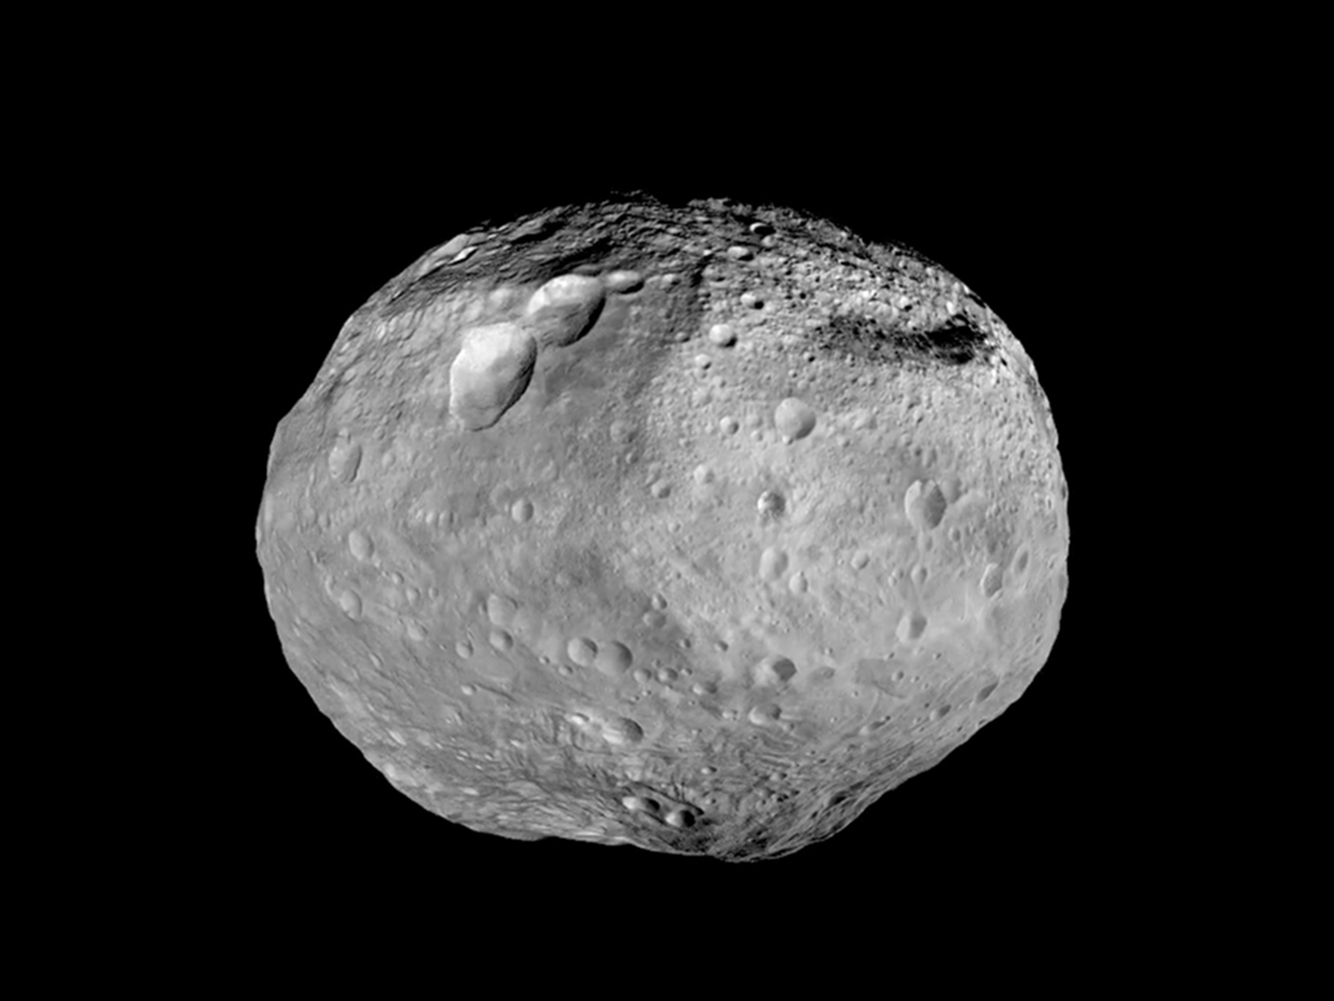 Giant asteroid Vesta